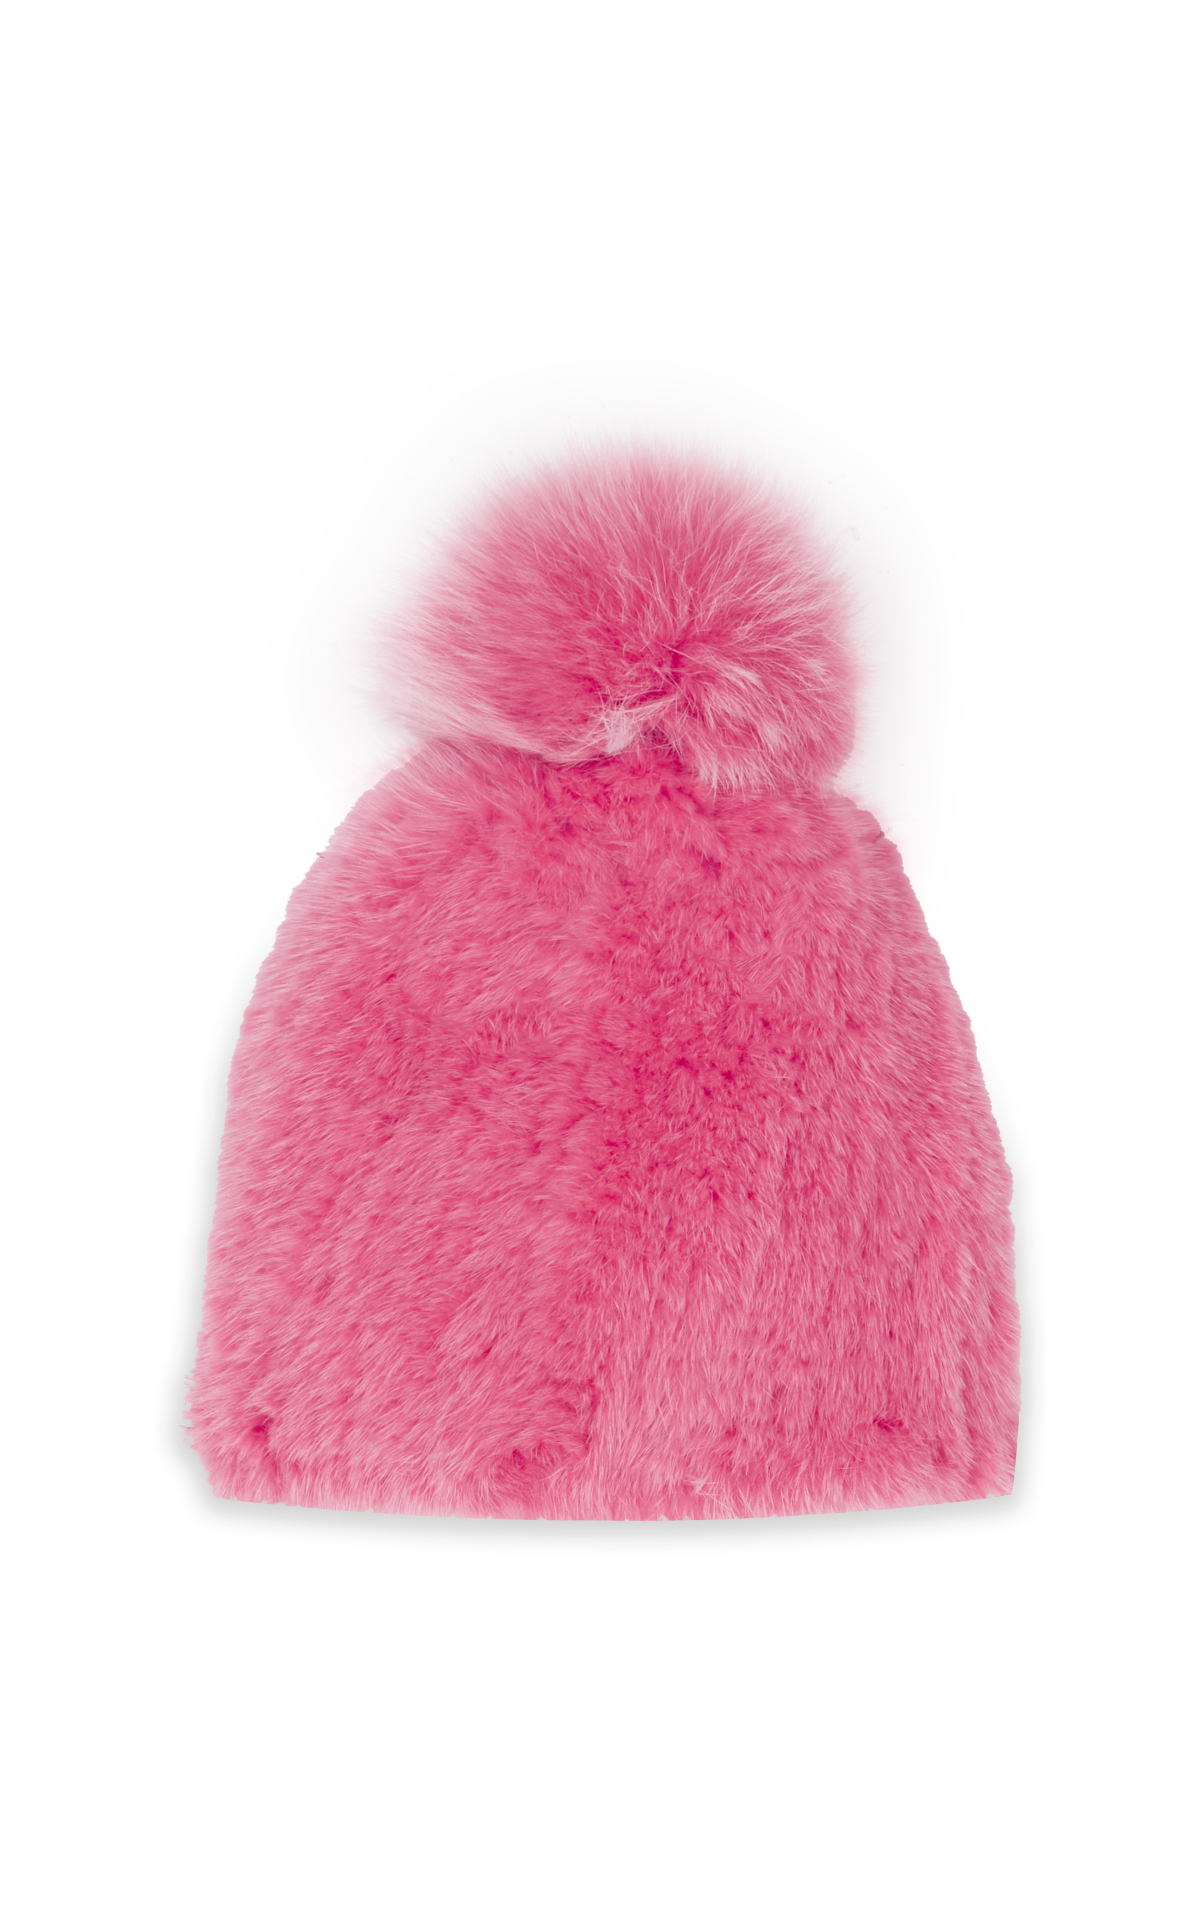 Pink fur hat